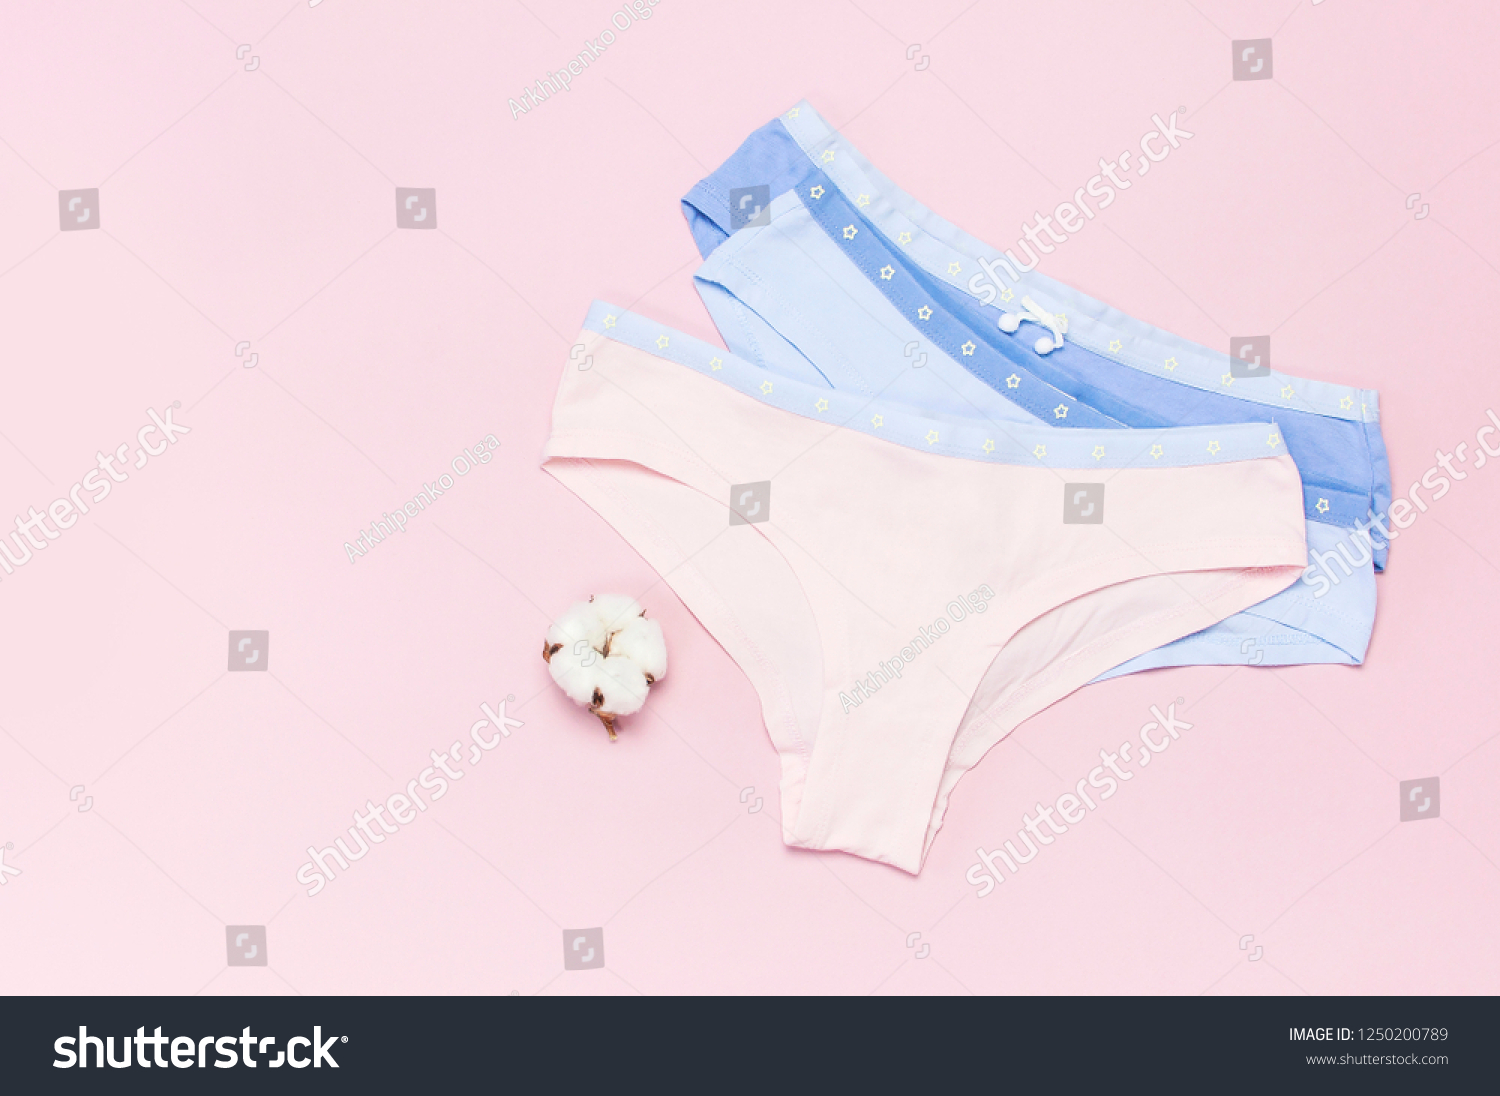 Cotton panties photo